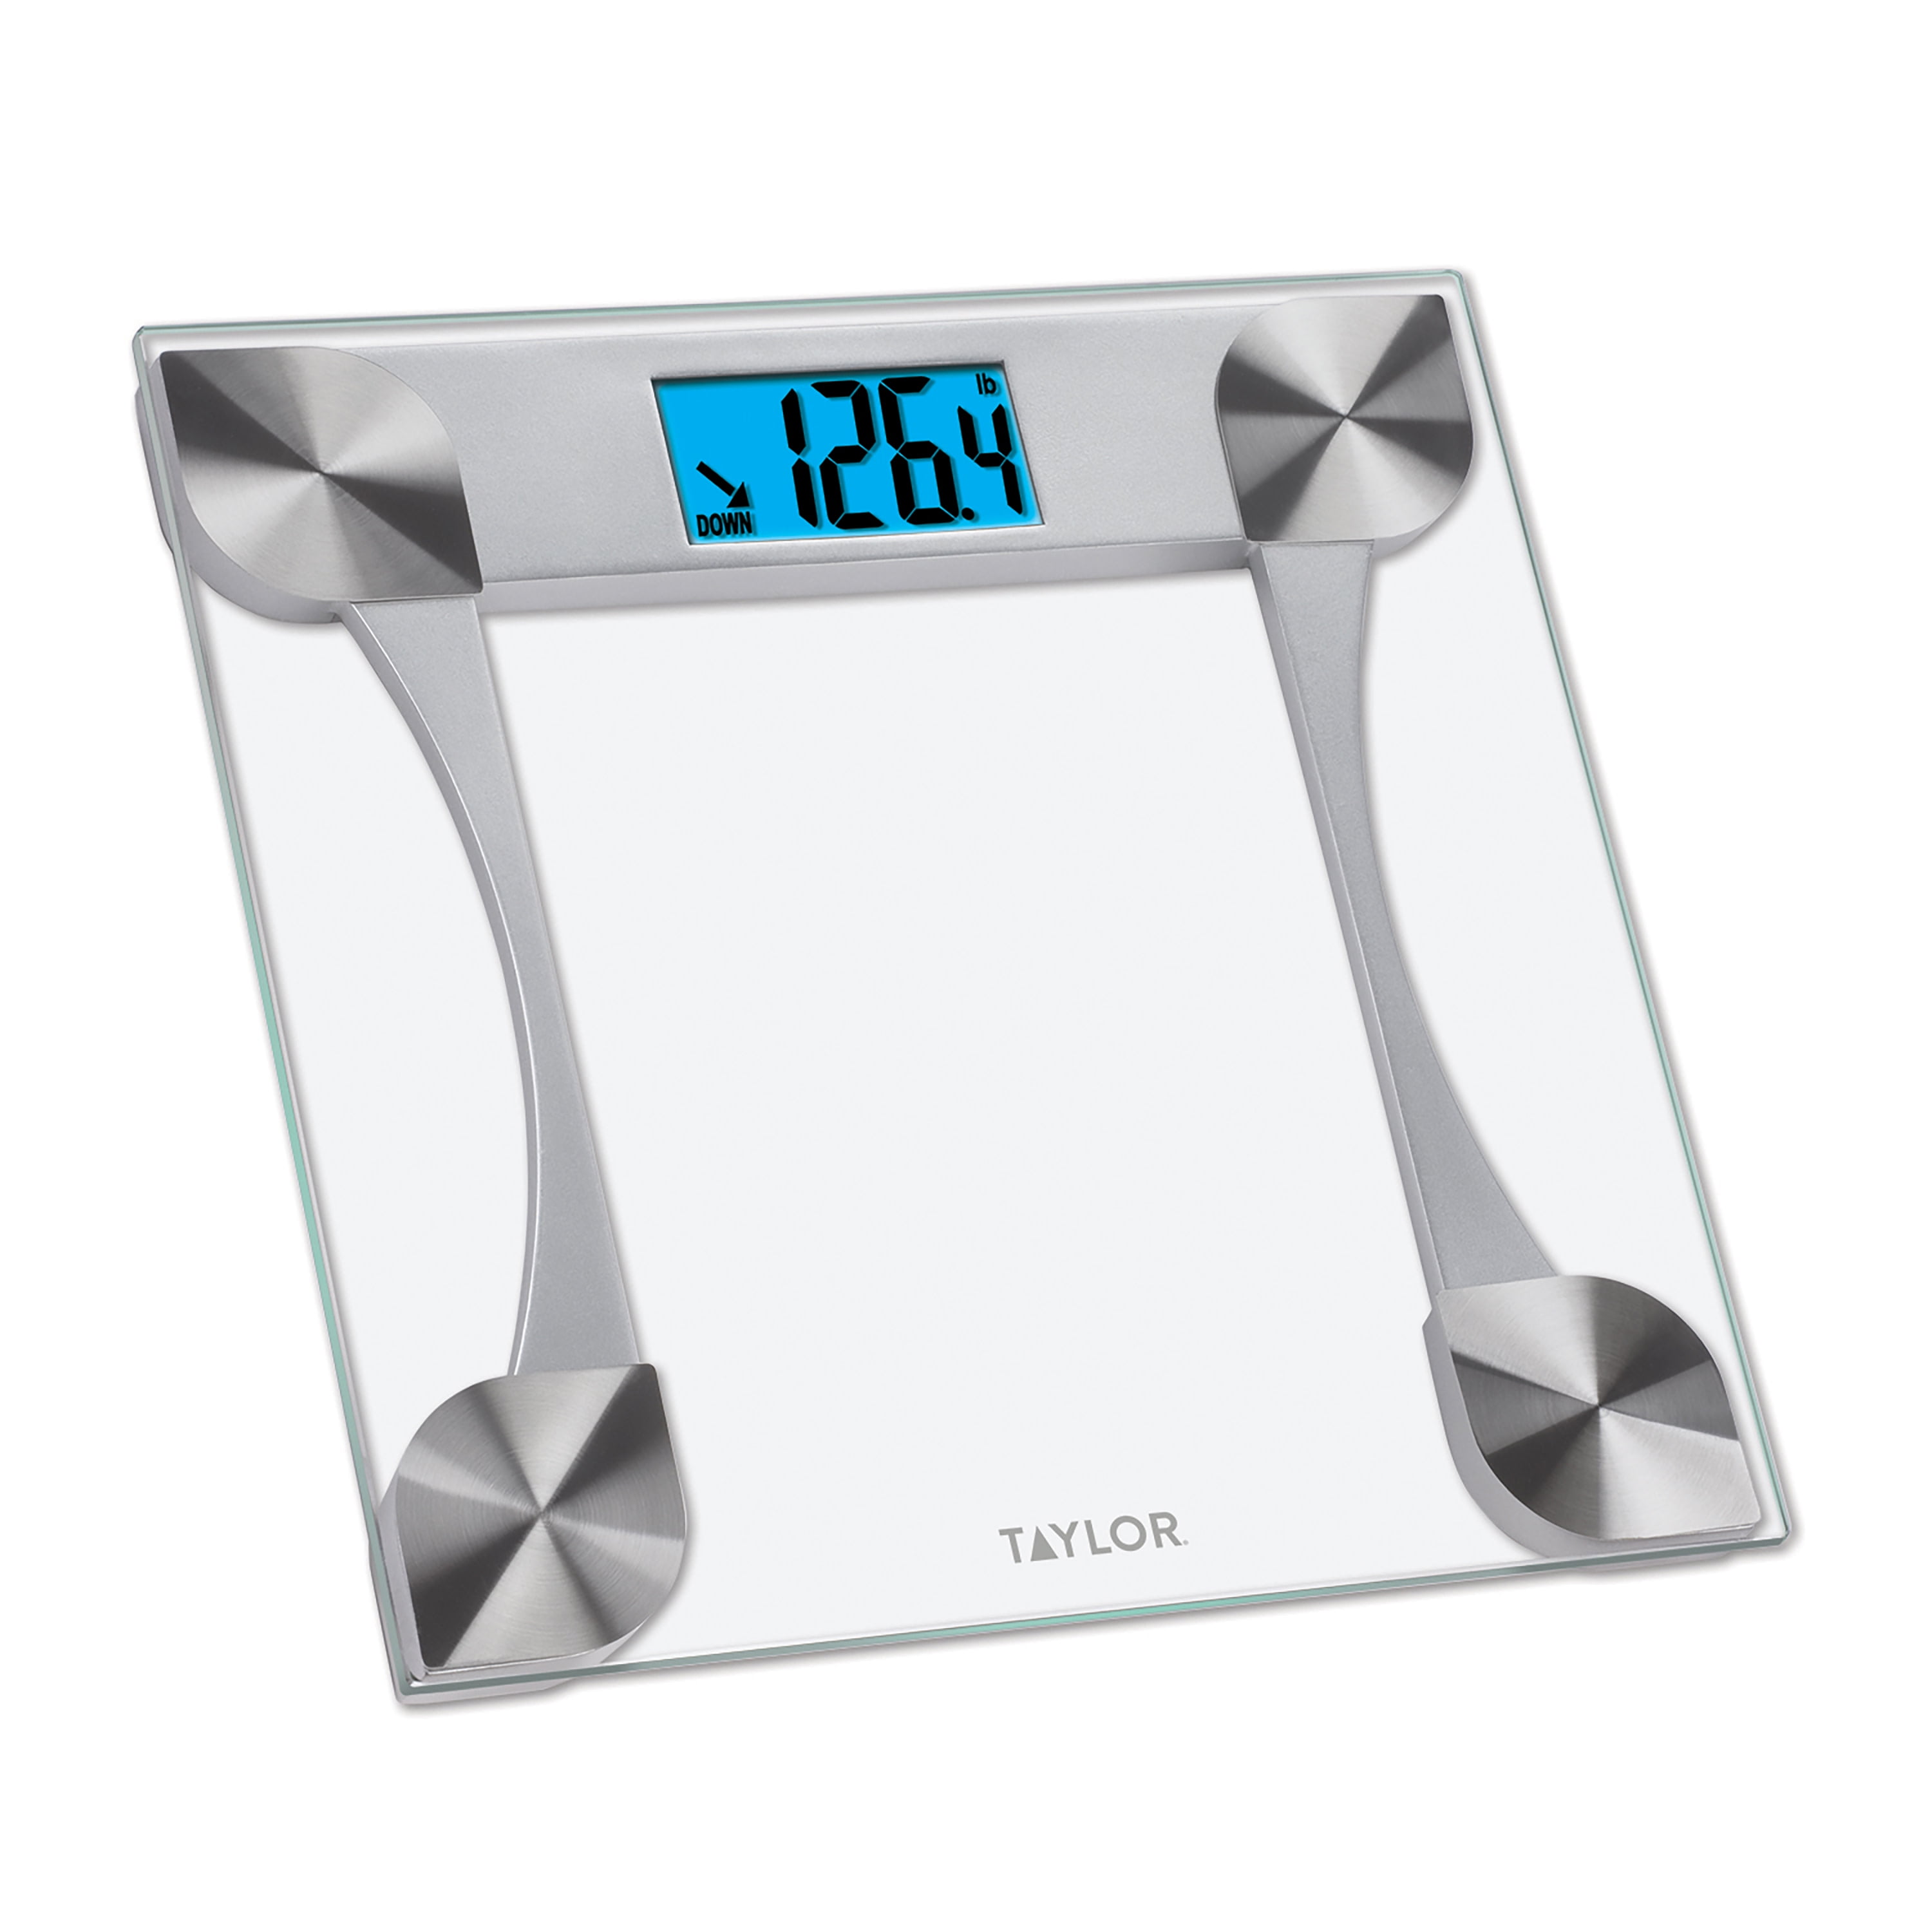 Taylor Digital Glass & Metal Bathroom Scale